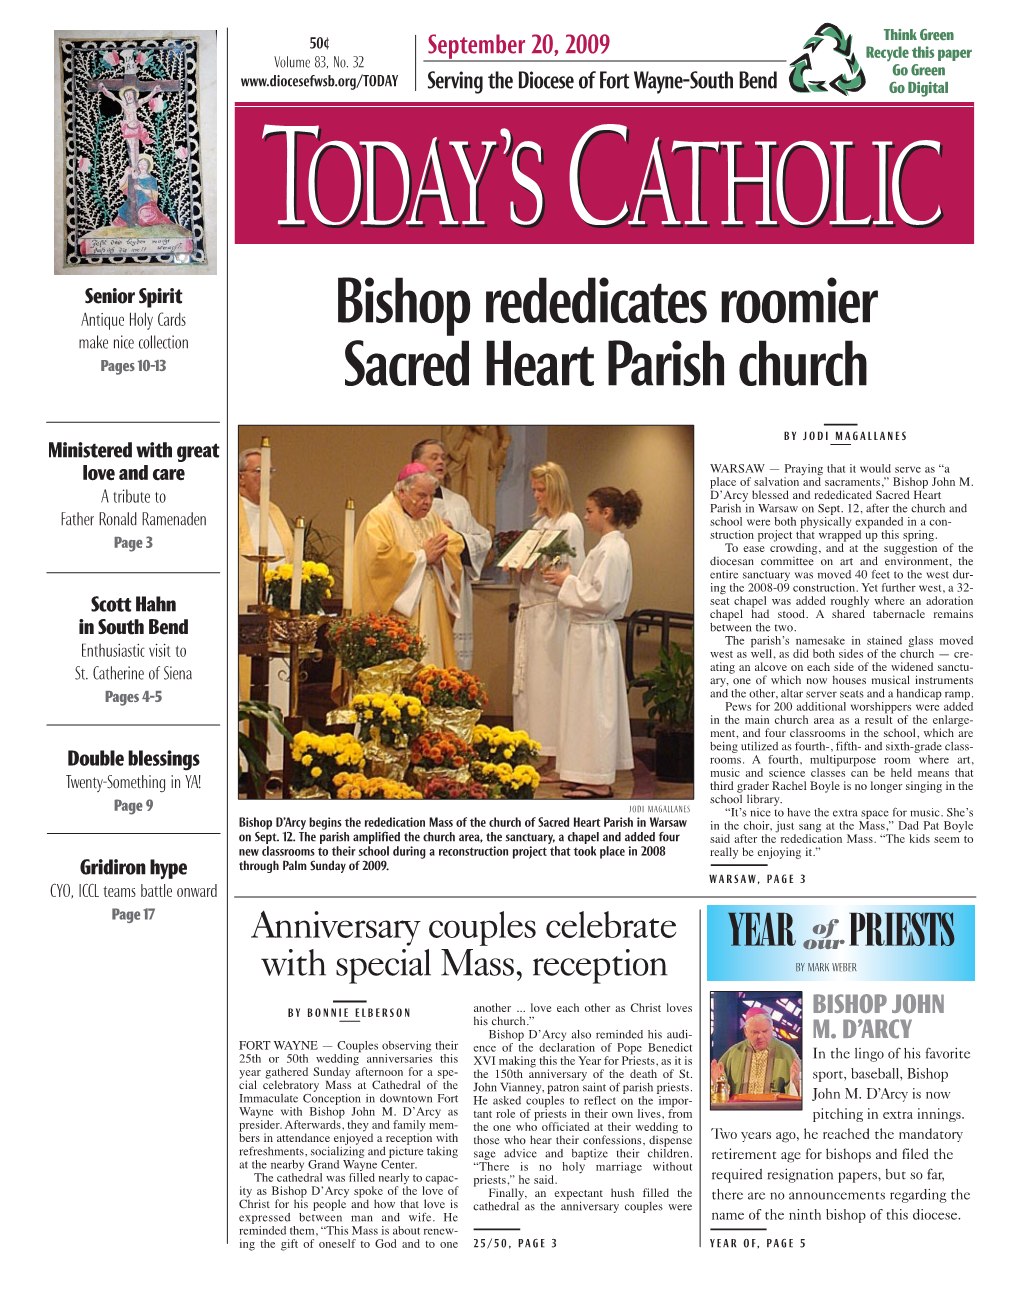 Bishop Rededicates Roomier Sacred Heart Parish Church